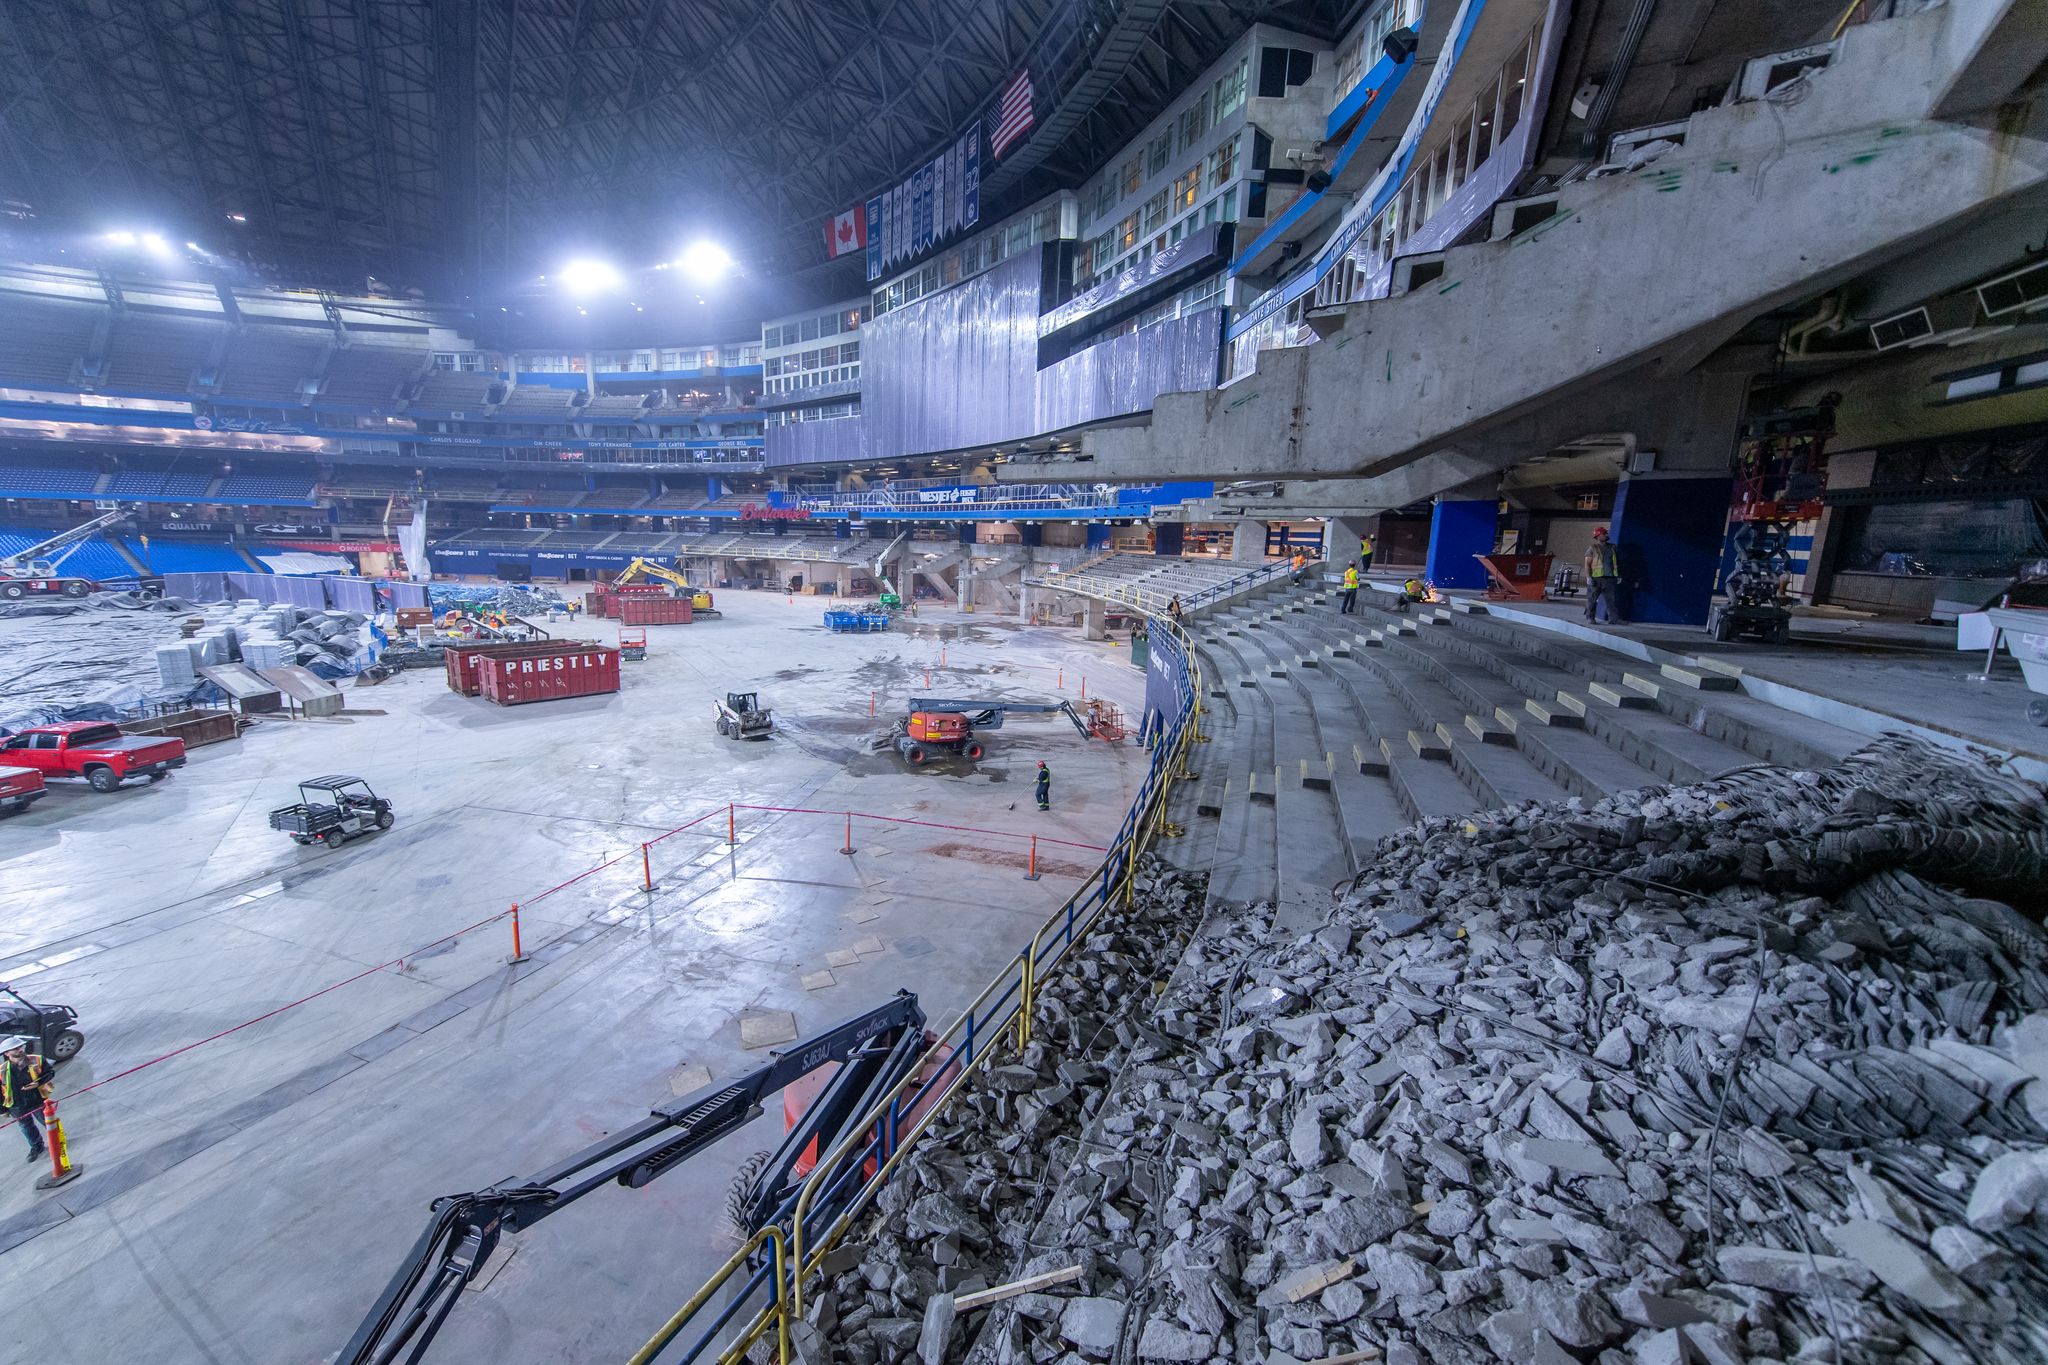 Toronto Blue Jays show off plans for next big Rogers Centre renovation